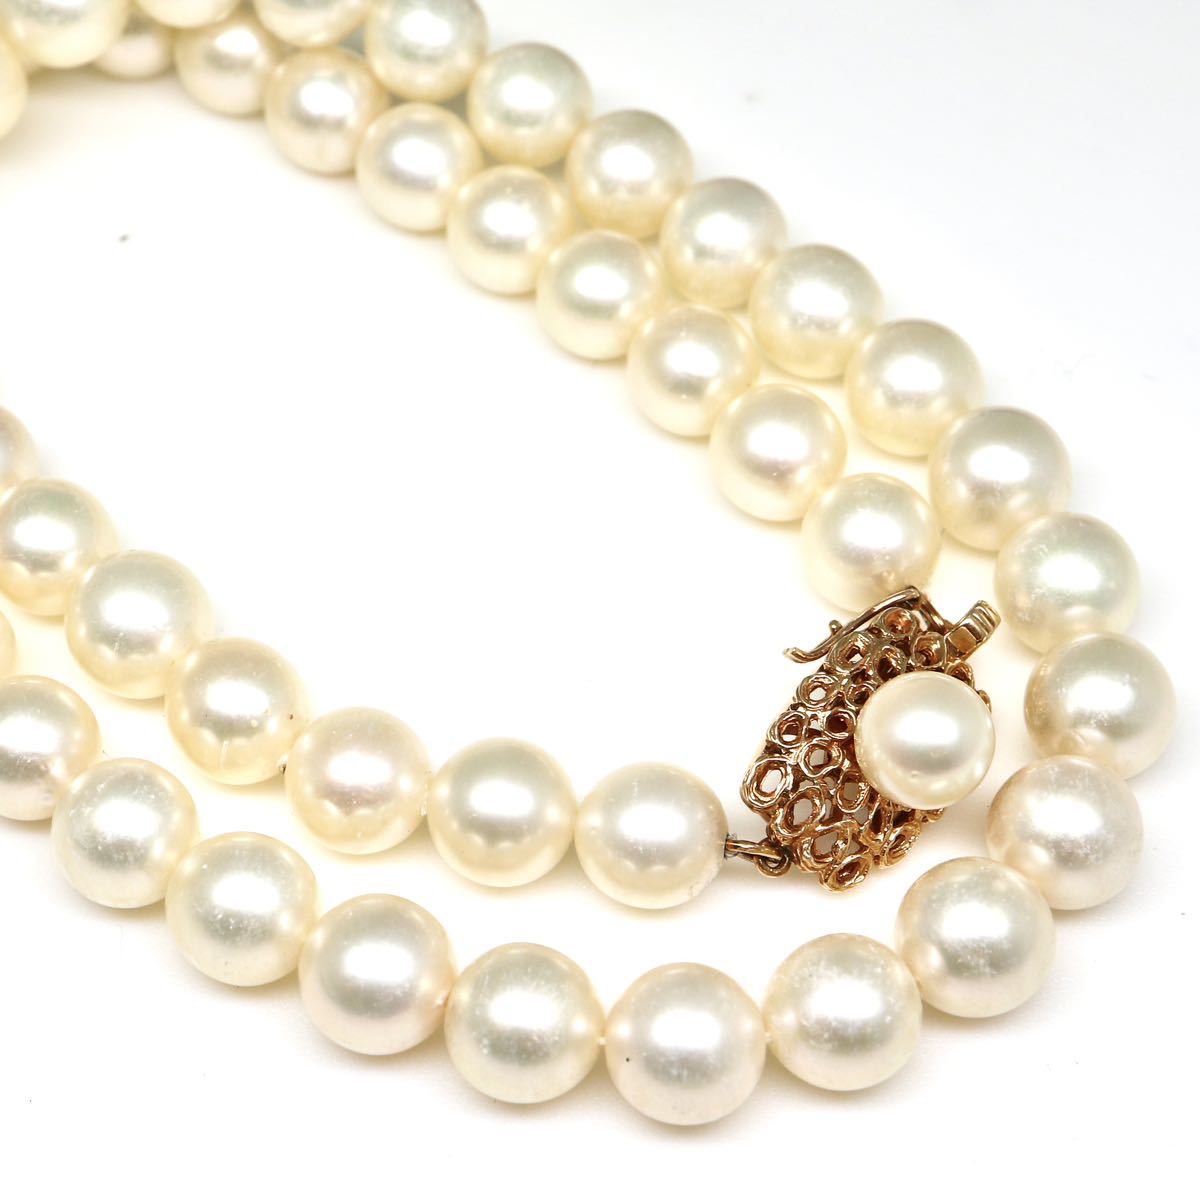 ◆K14 アコヤ本真珠ネックレス◆N 33.6g 40.0cm 7.5mm珠 真珠 pearl necklace ジュエリー jewelry EA5/EA5_画像1